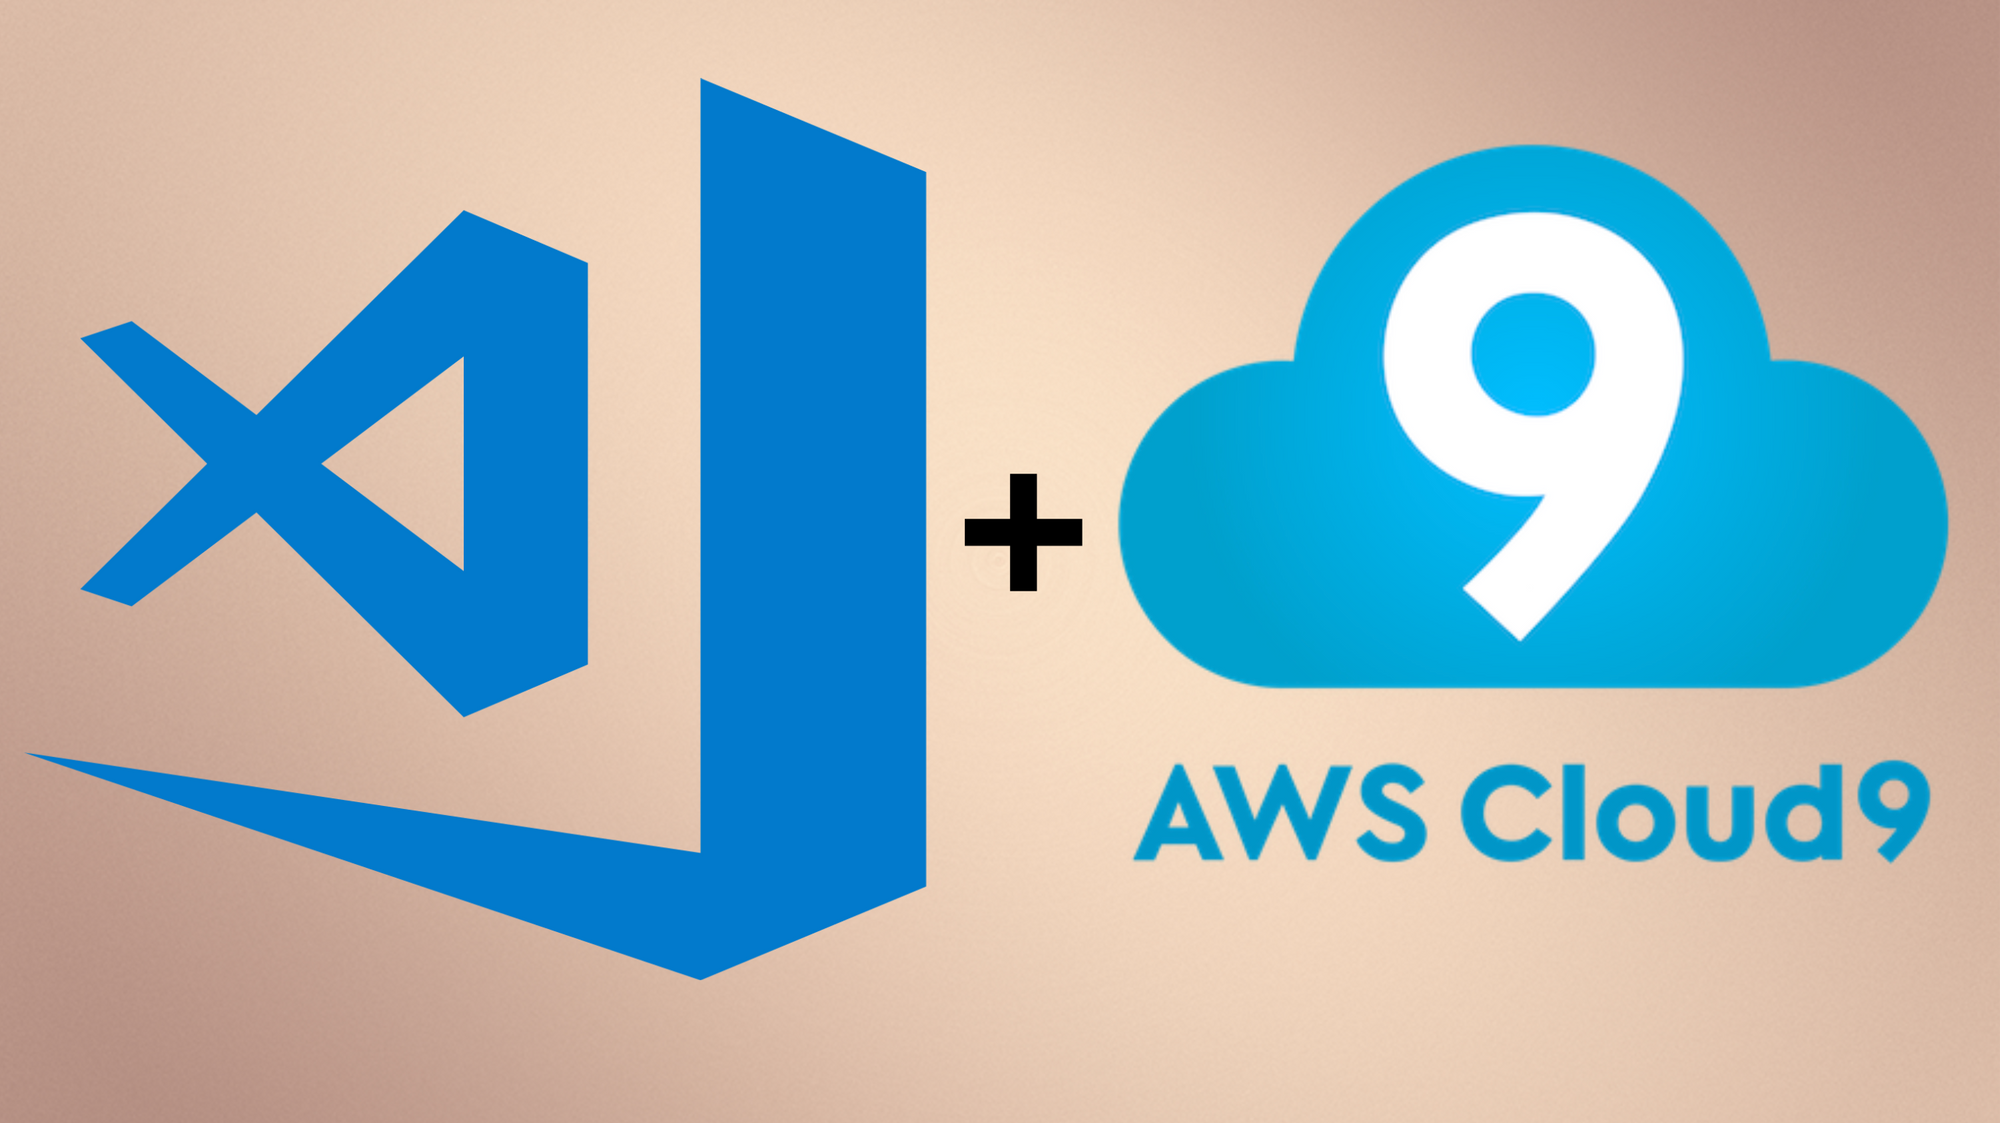 VS code + AWS cloud9 = the ultimate development setup !